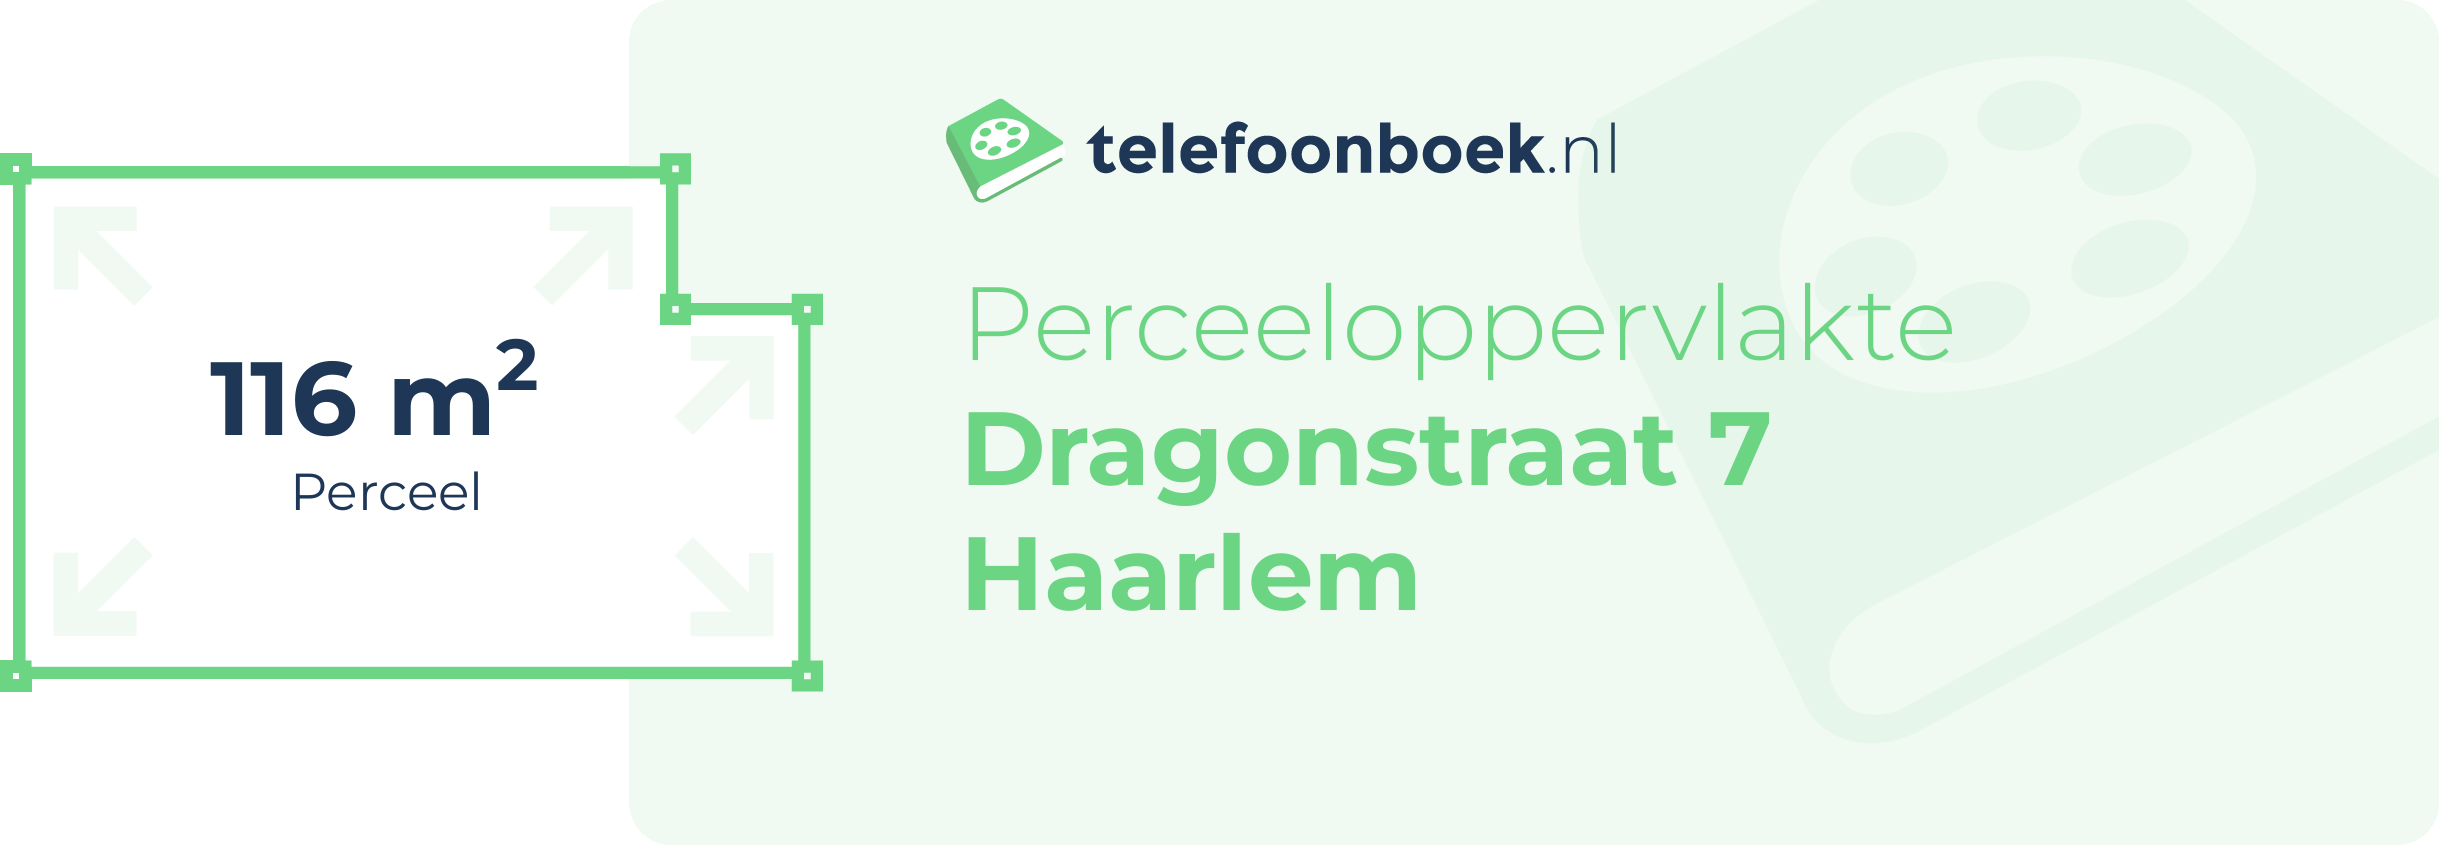 Perceeloppervlakte Dragonstraat 7 Haarlem